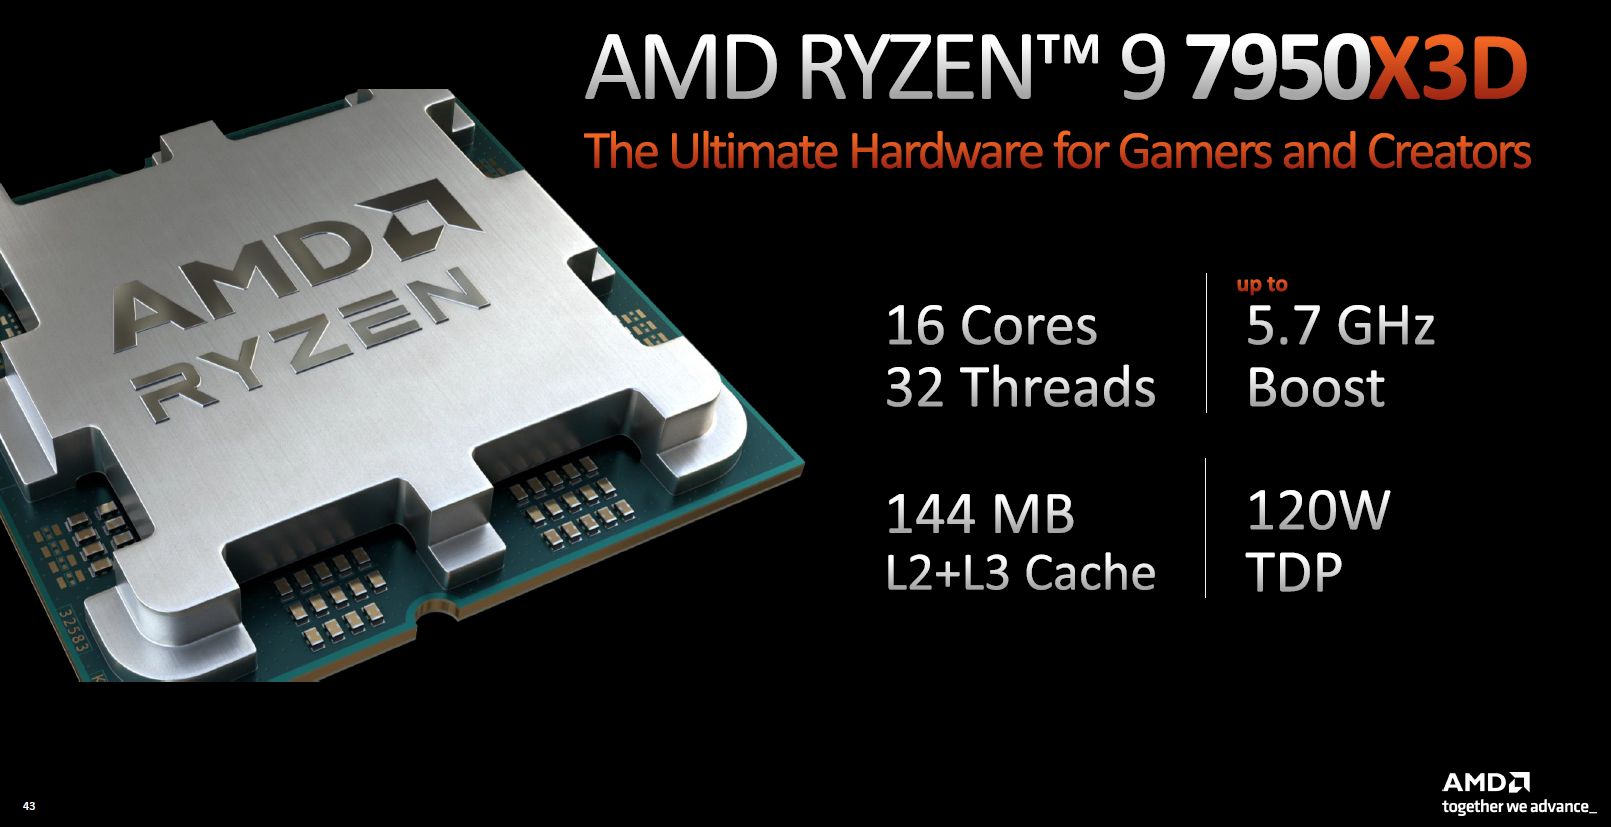 amd ryzen 7000 x3d slide 3 เอเอ็มดีเปิดตัวซีพียู AMD RYZEN 9 7950X3D 16C/32T ความเร็ว 5.7Ghz อัดแคช Cache มากถึง 144MB กันเลยทีเดียว  